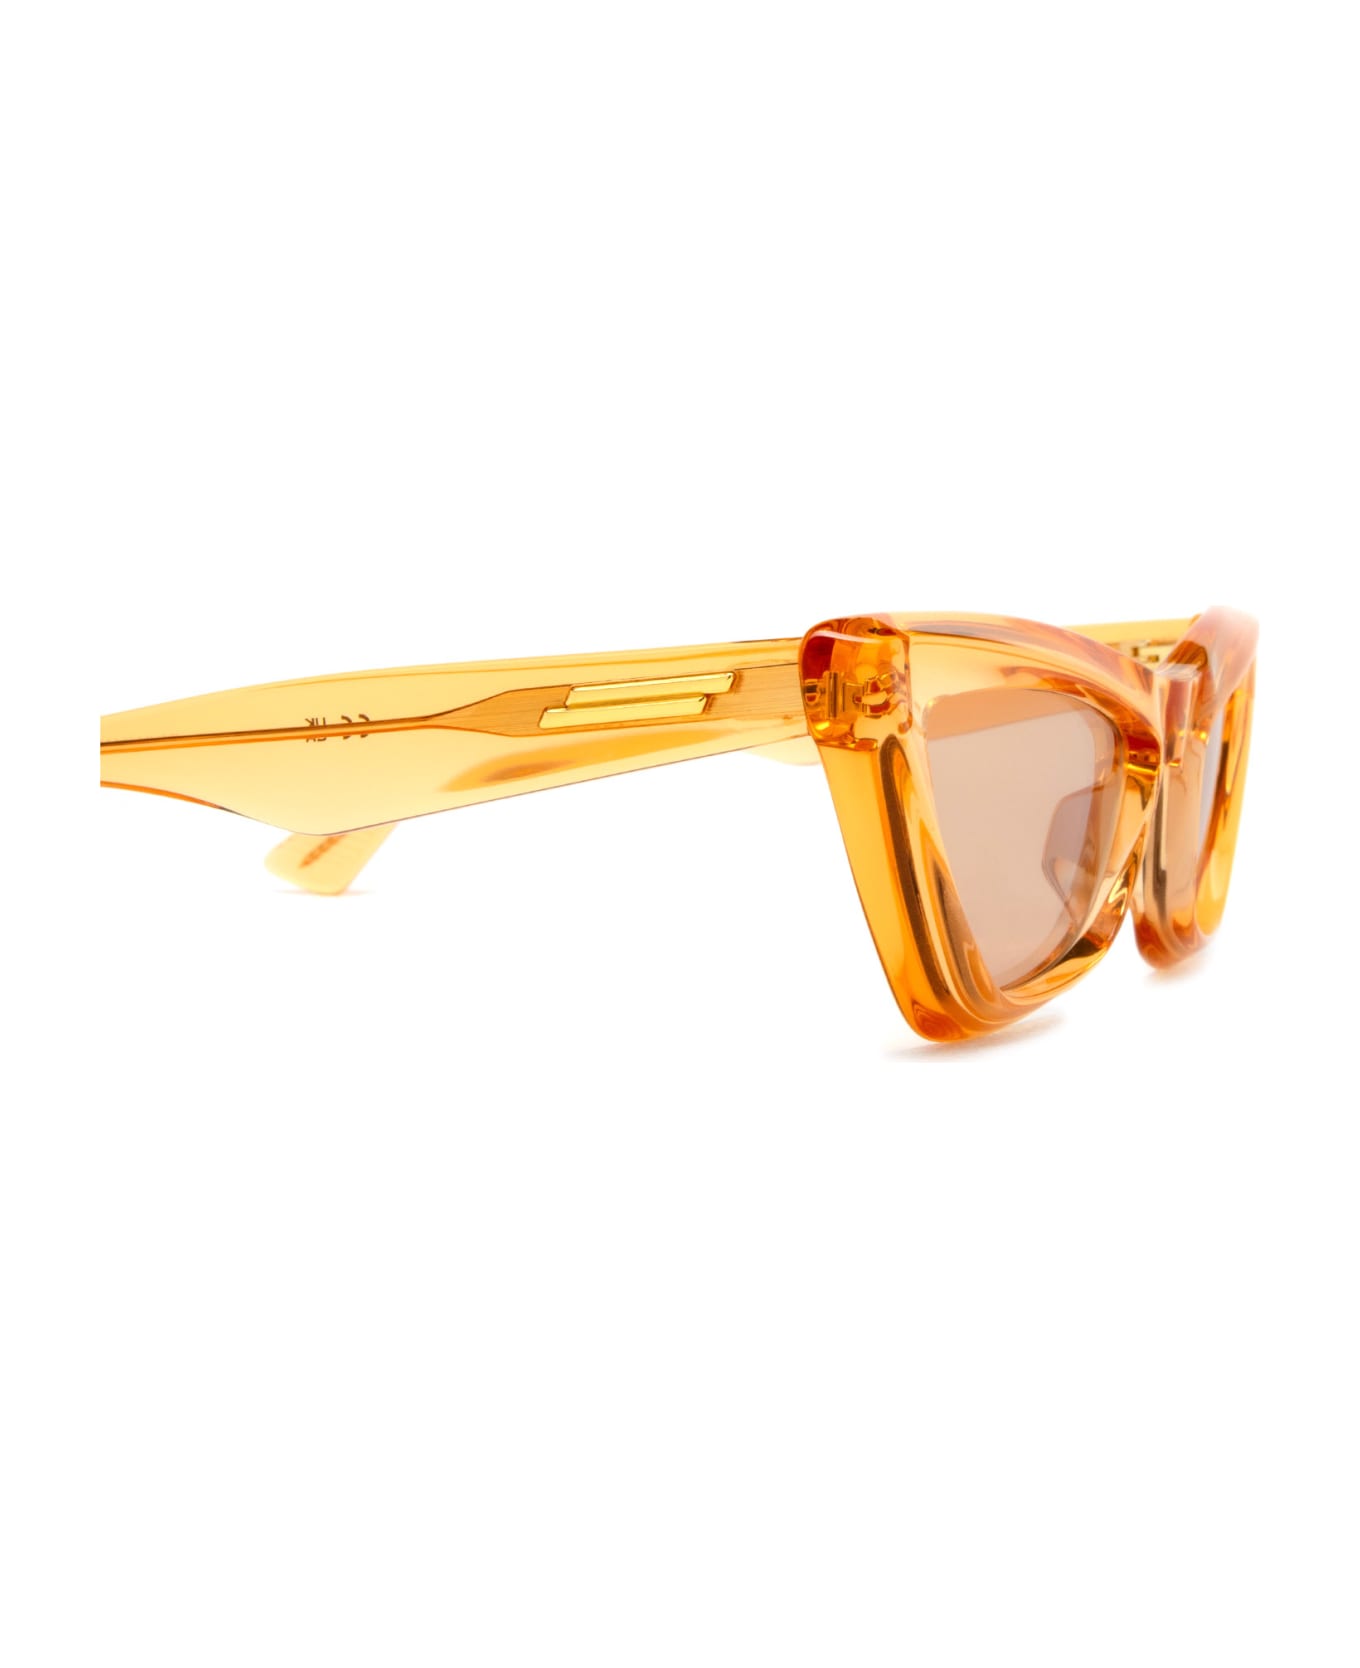 Bottega Veneta Eyewear Bv1101s Orange Sunglasses - Orange